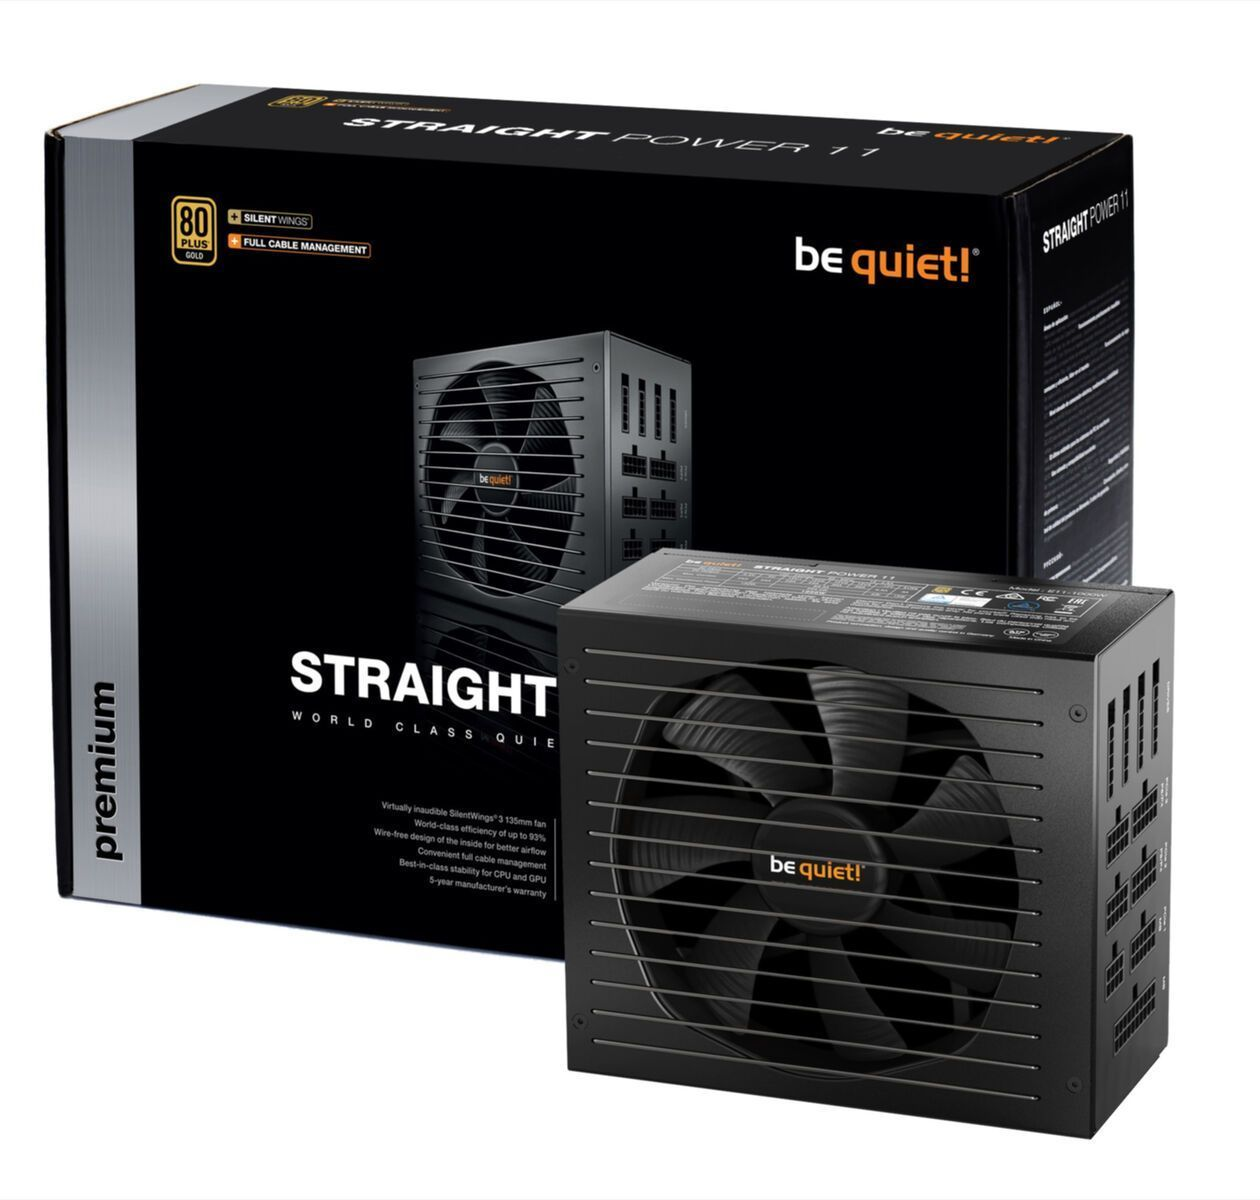 BE QUIET! Straight Power 850 Netzteil Watt 11 PC